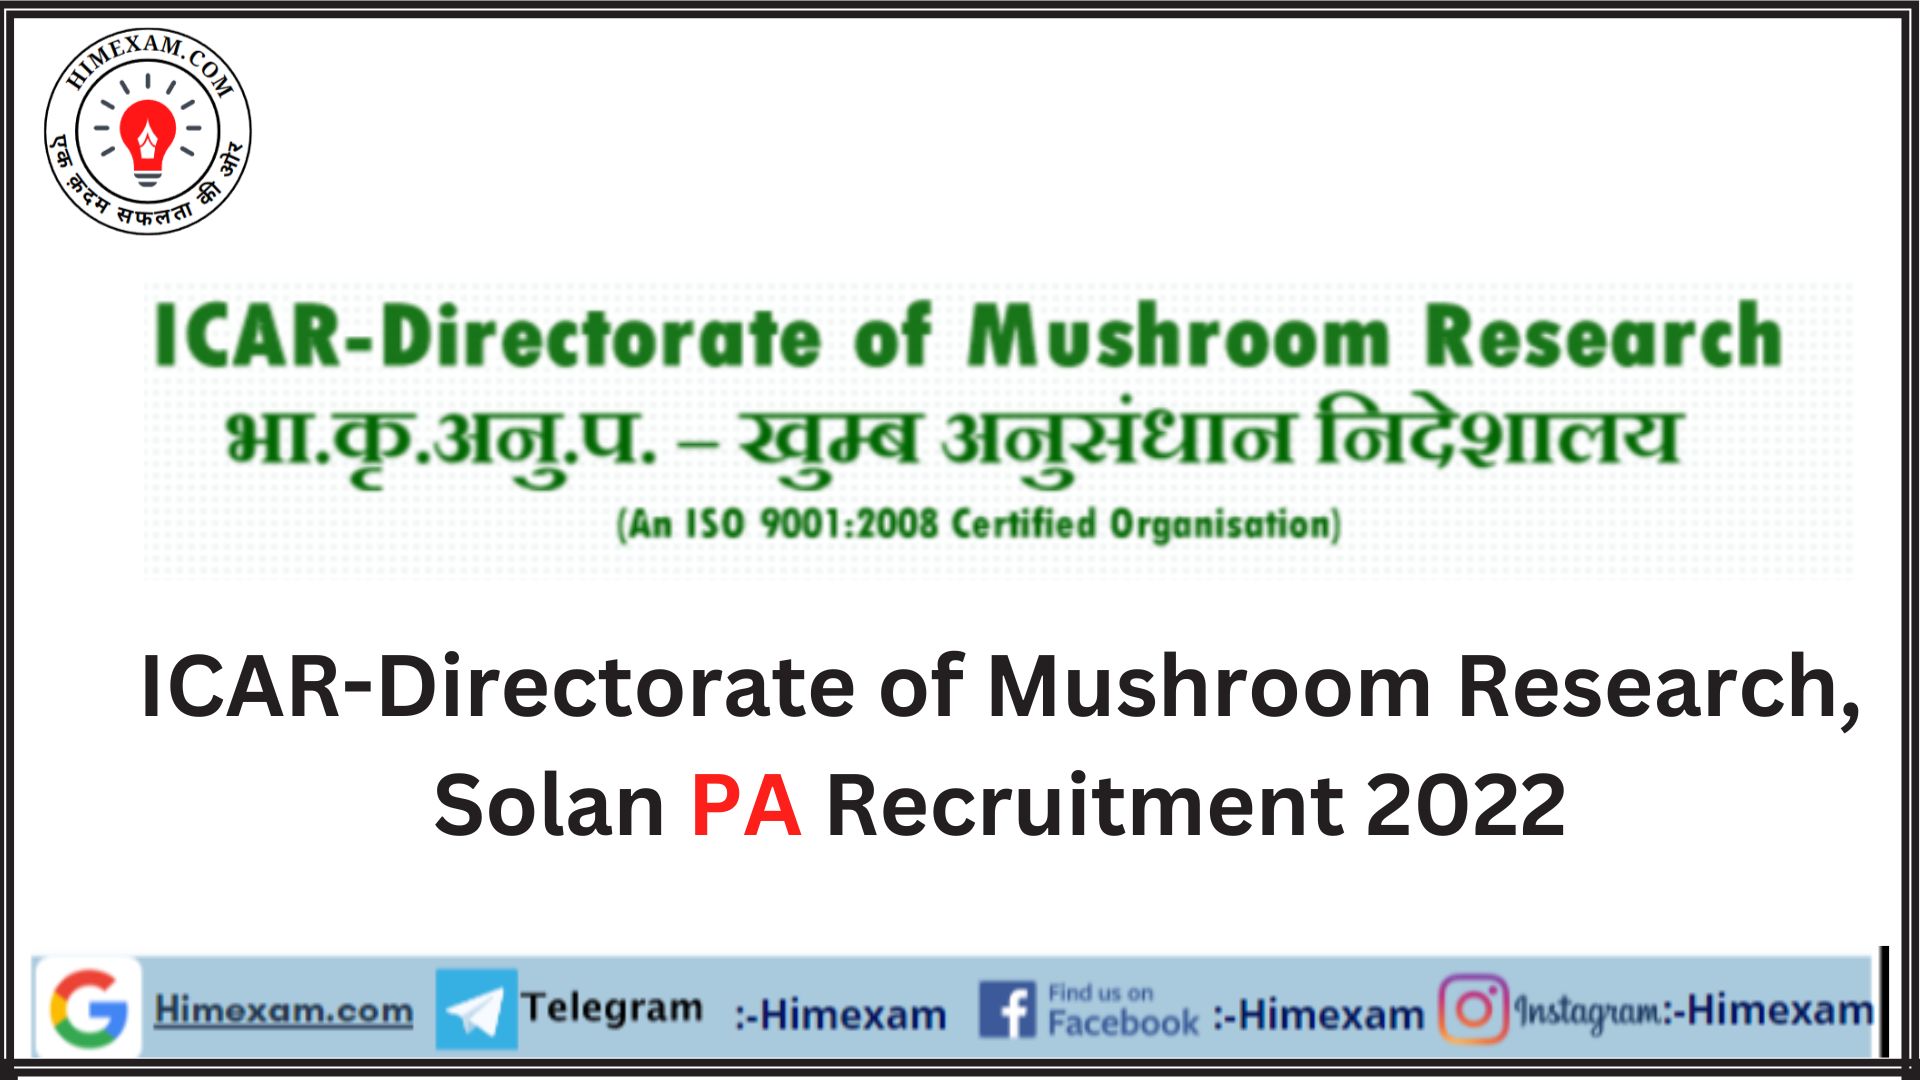 ICAR-Directorate of Mushroom Research, Solan PA Recruitment 2022